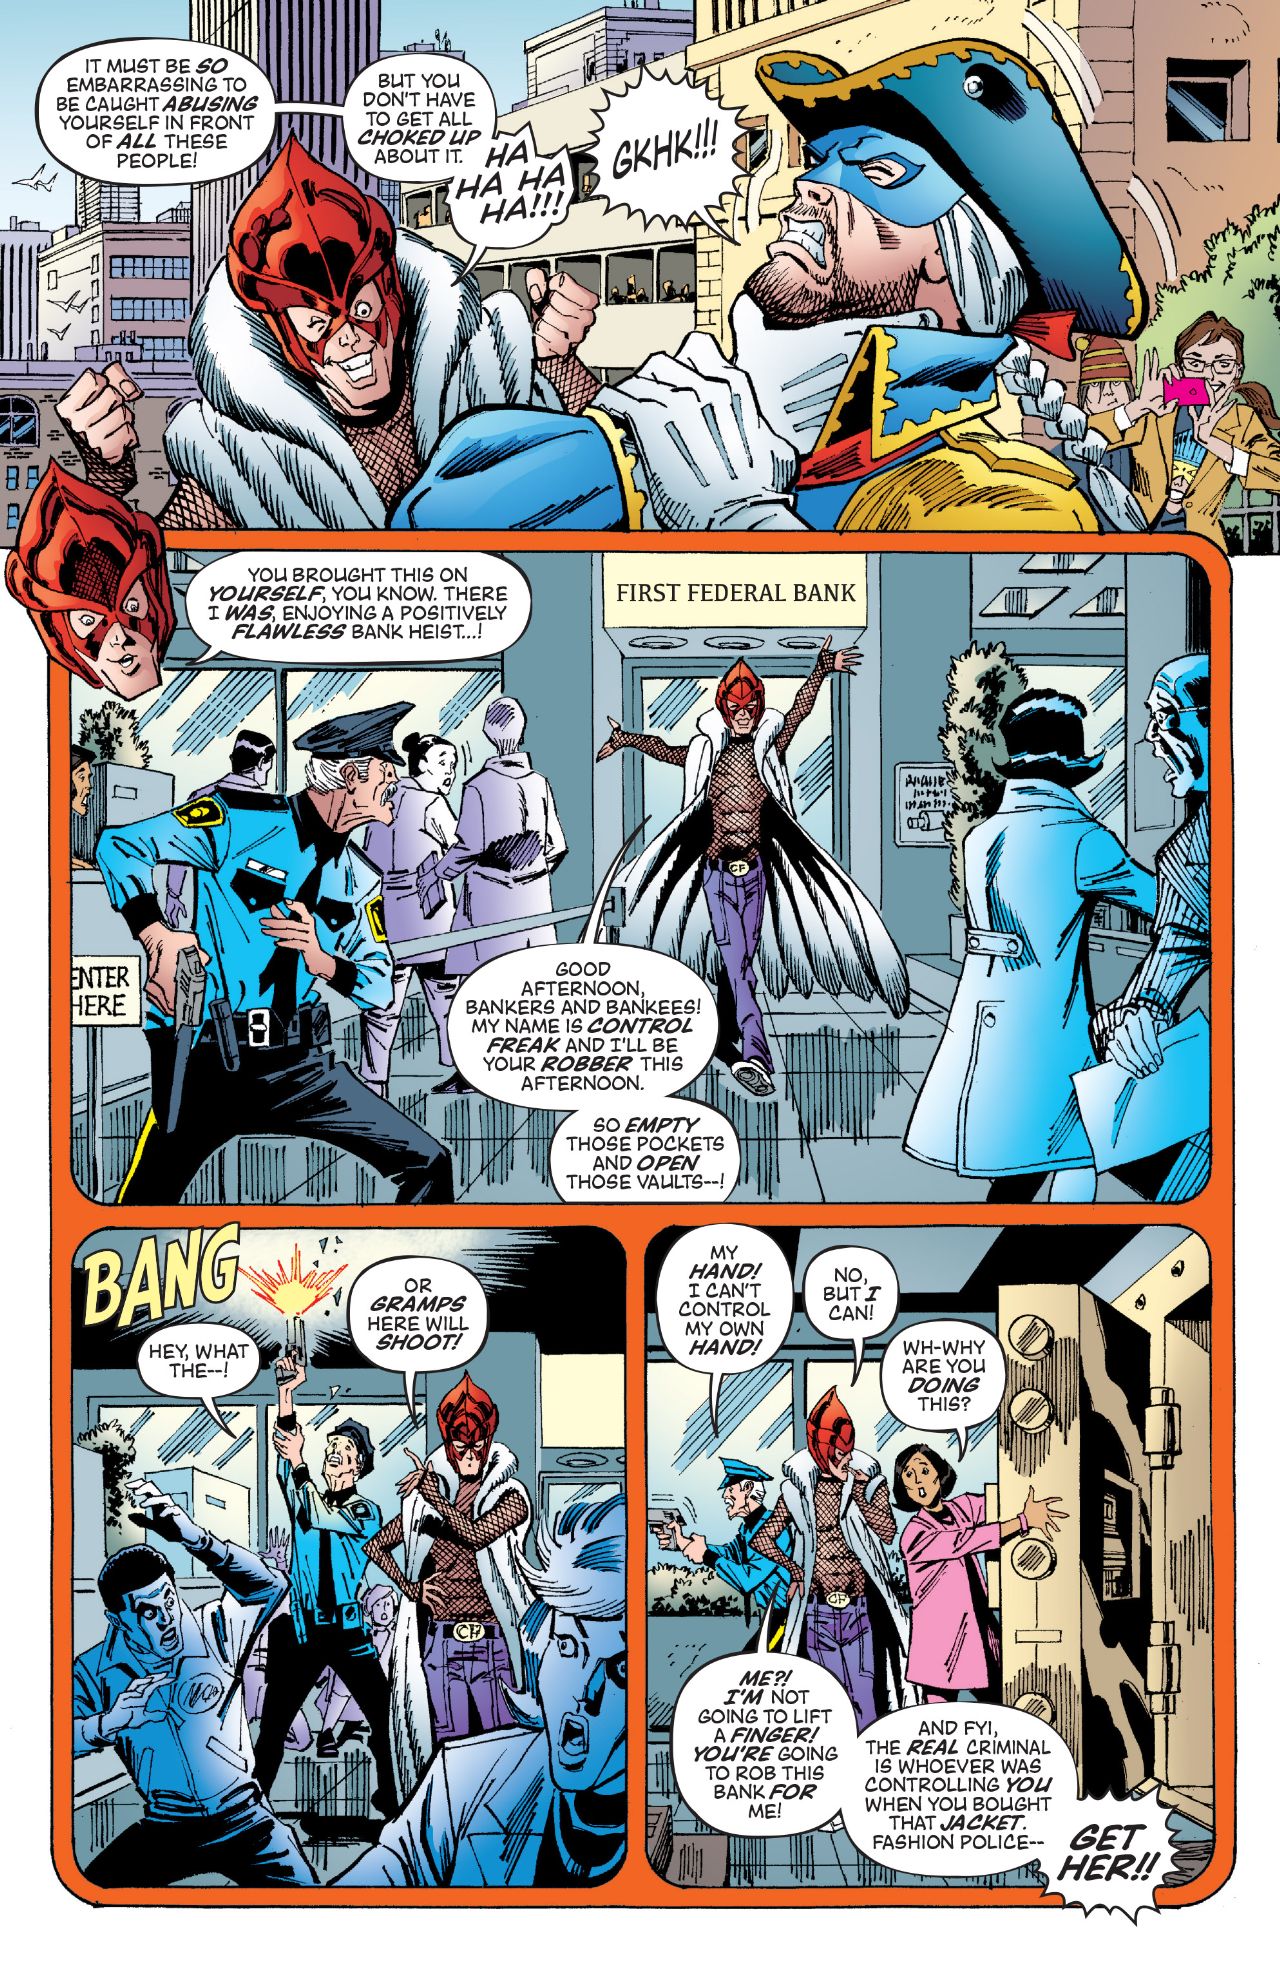 BLUE BARON #2.1 preview – First Comics News